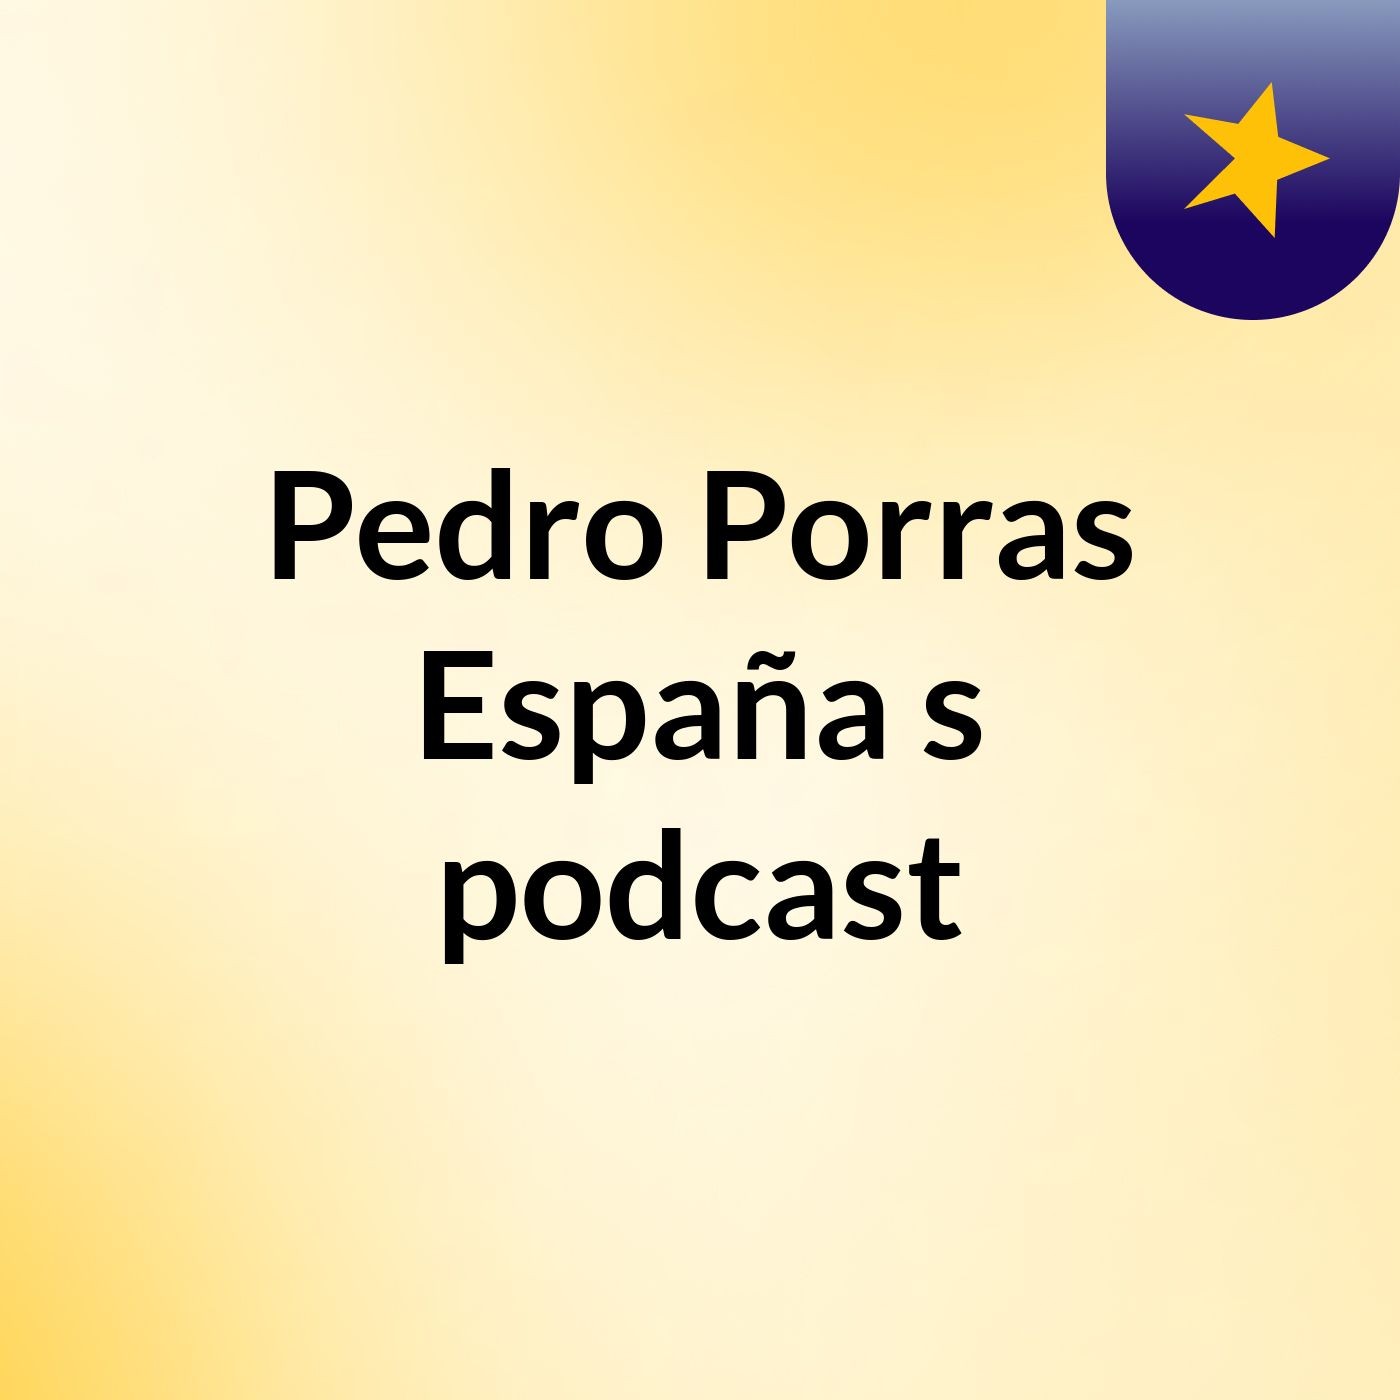 Pedro Porras España's podcast